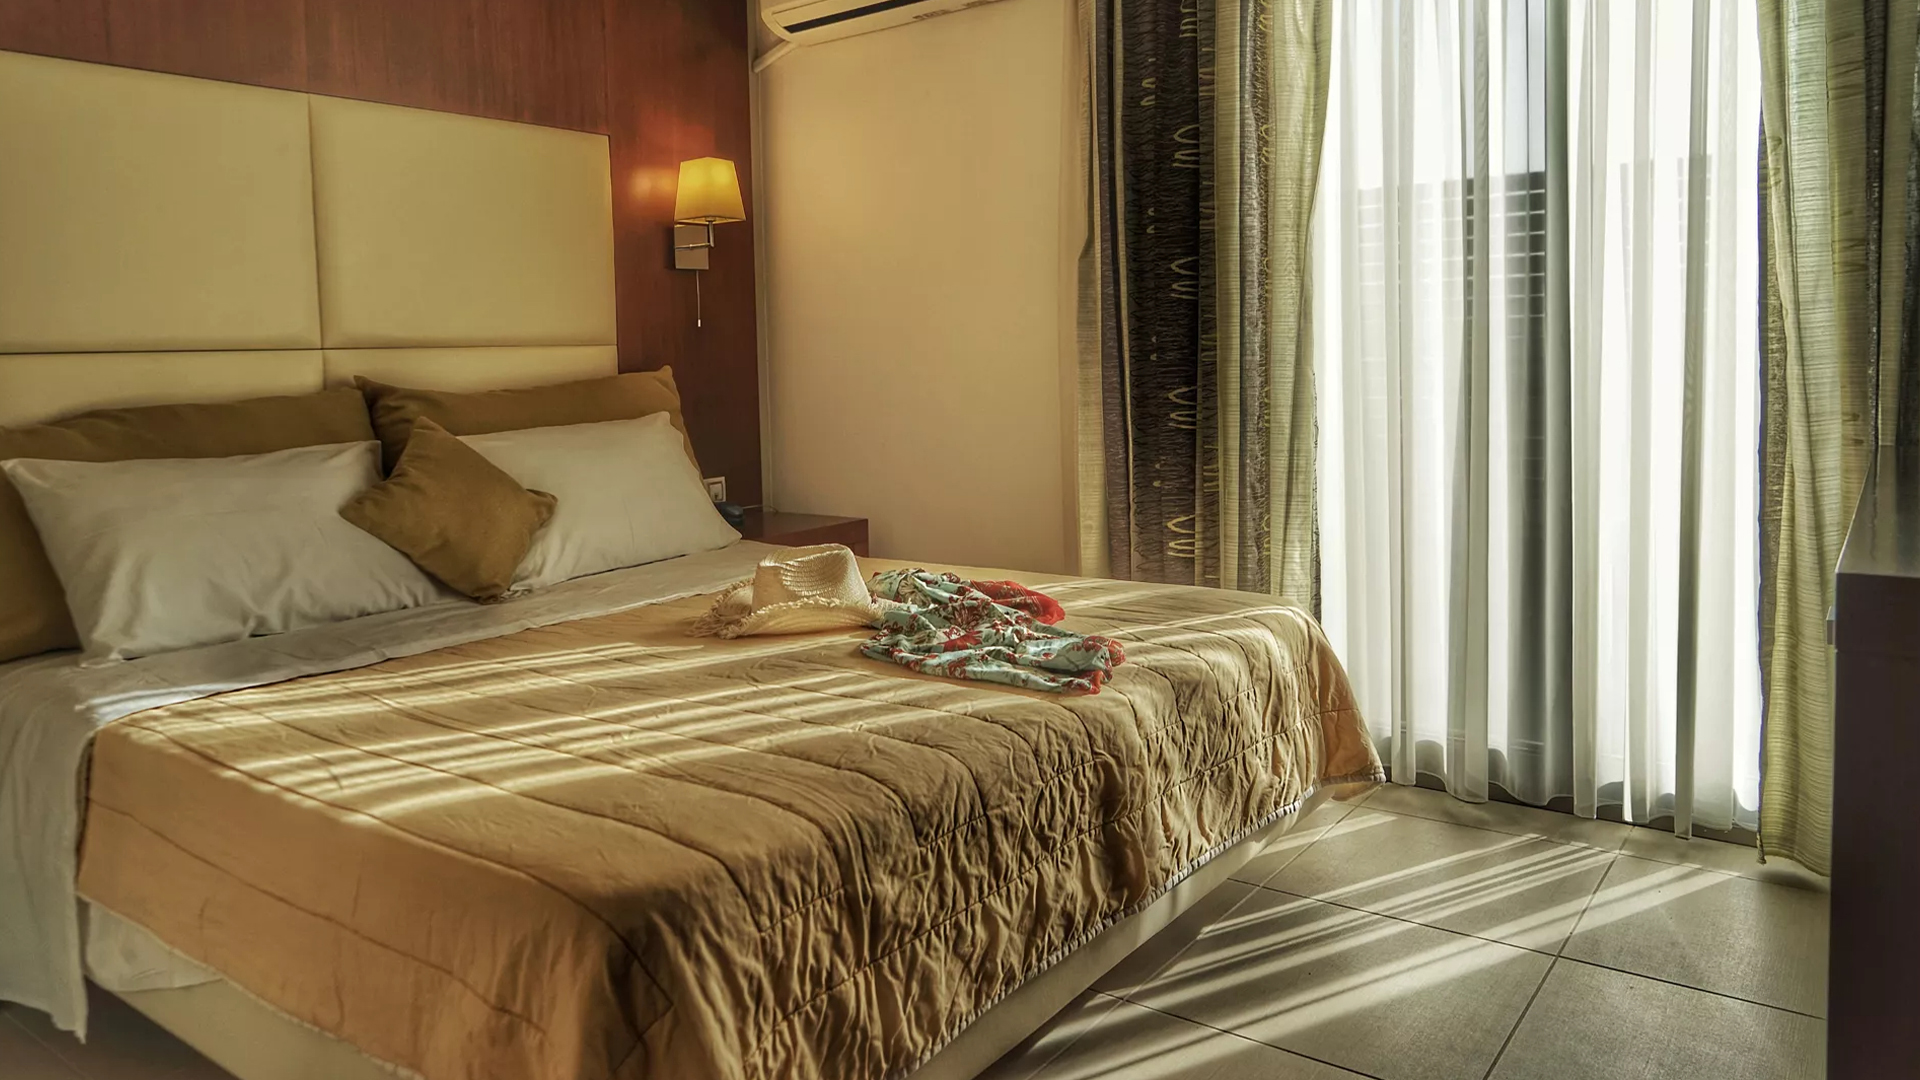 Golden Sun Kokkoni Beach Hotel - Κοκκώνι Κορινθίας ✦ -18% ✦ 3 Ημέρες (2 Διανυκτερεύσεις) ✦ 2 άτομα ✦ 8 ✦ Εορτές (22/12/2023 έως 08/01/2024) ✦ Υπέροχη Τοποθεσία!